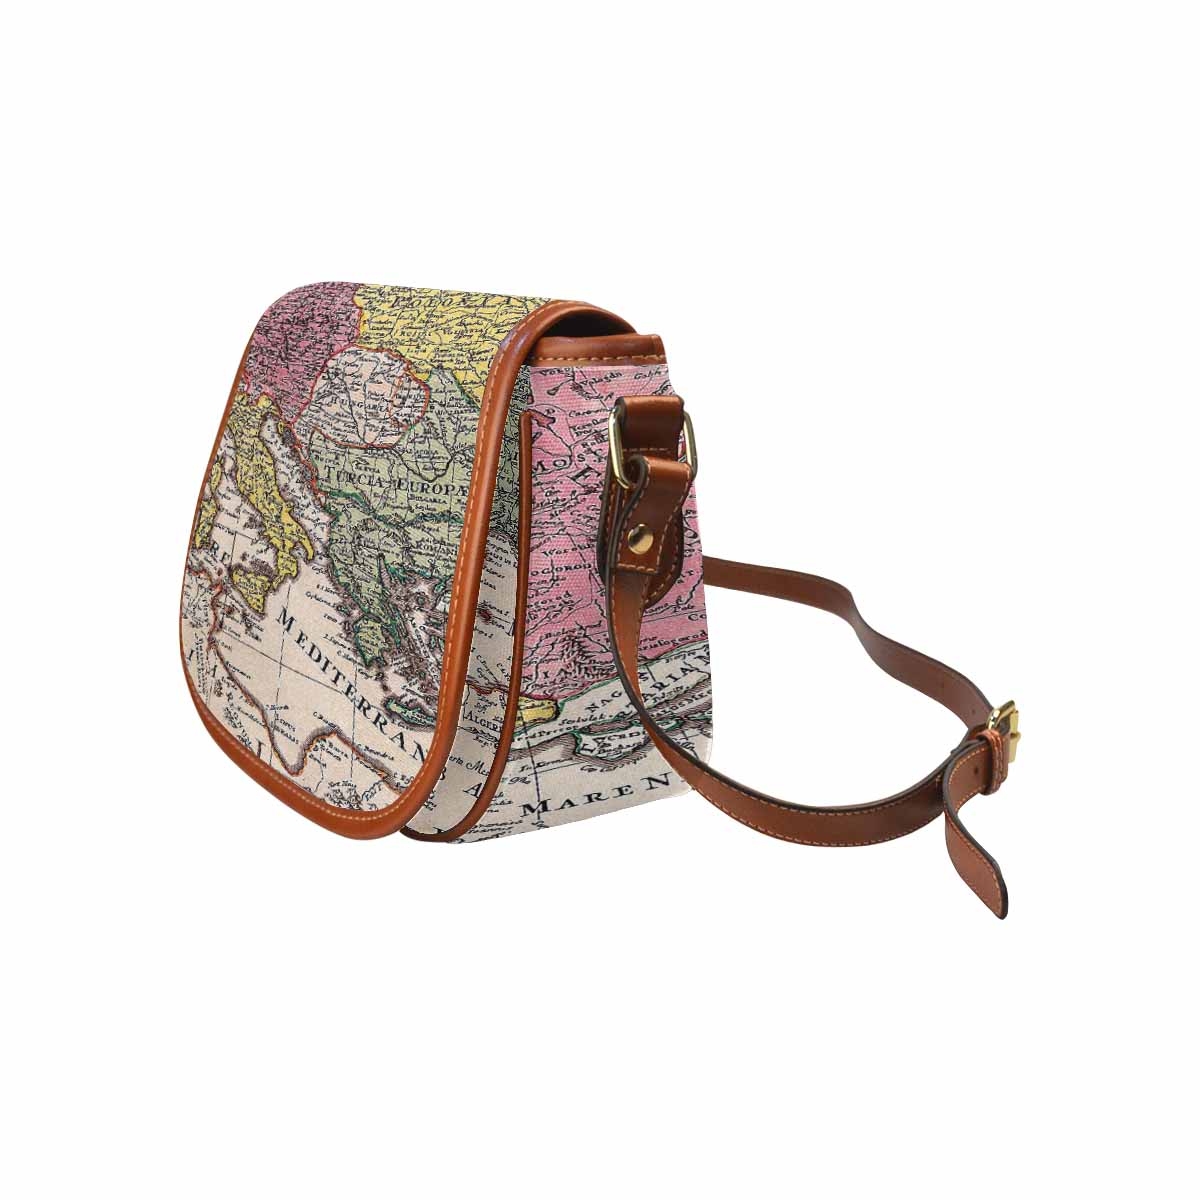 Antique Map design Handbag, saddle bag, Design 43